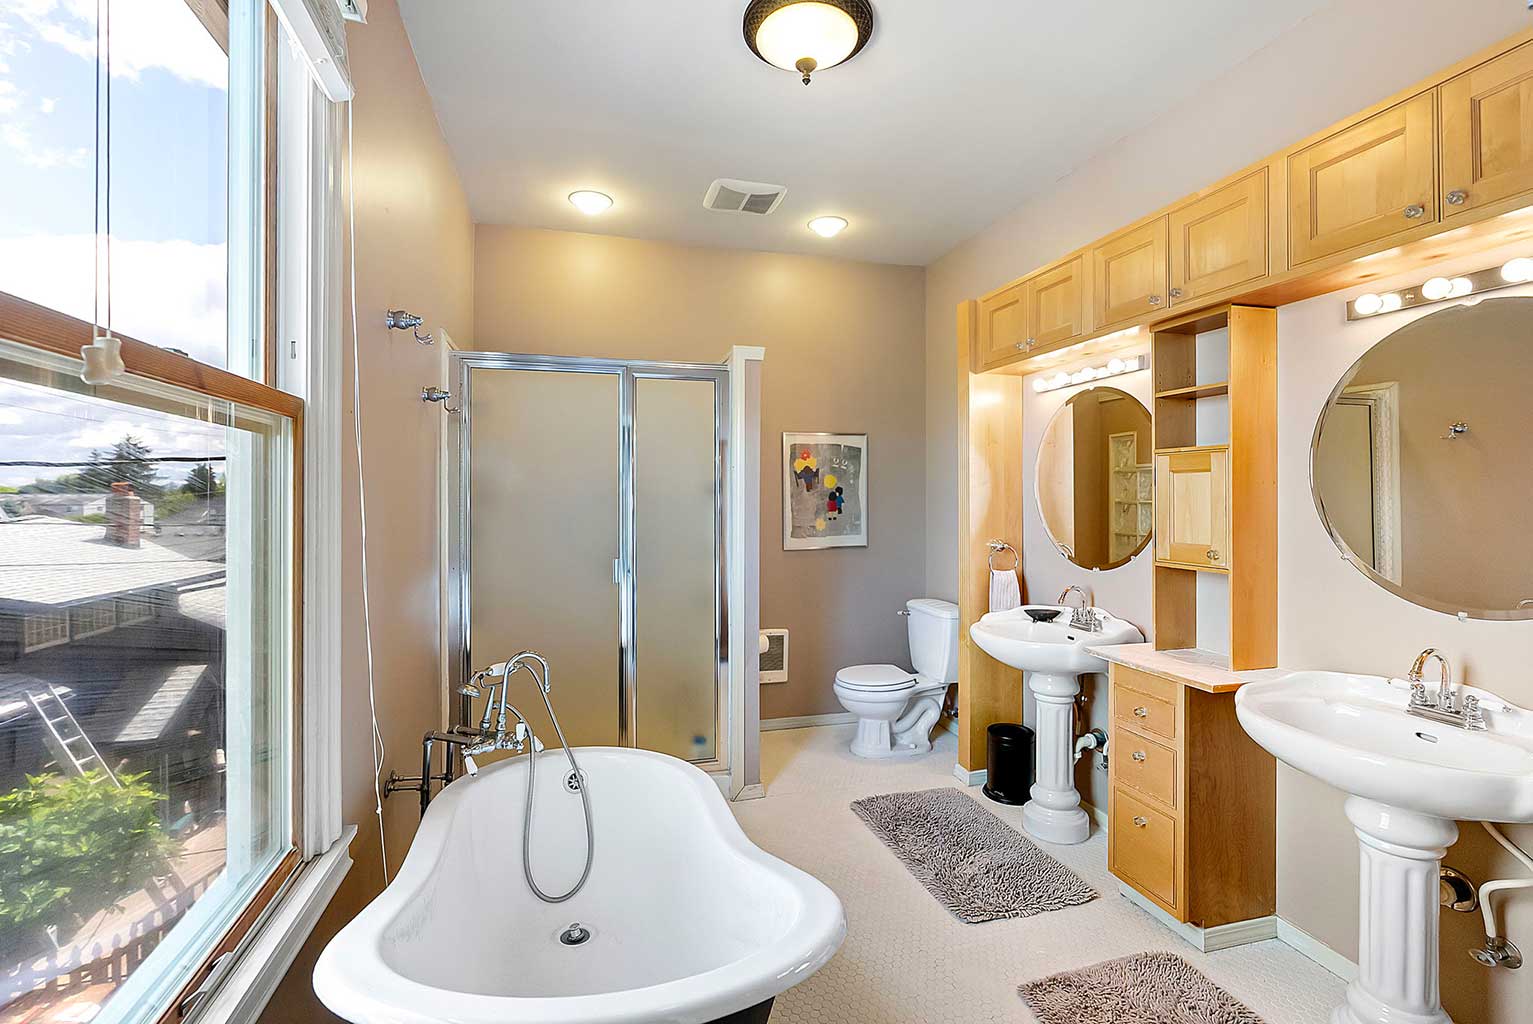 Dual vanities and separate shower